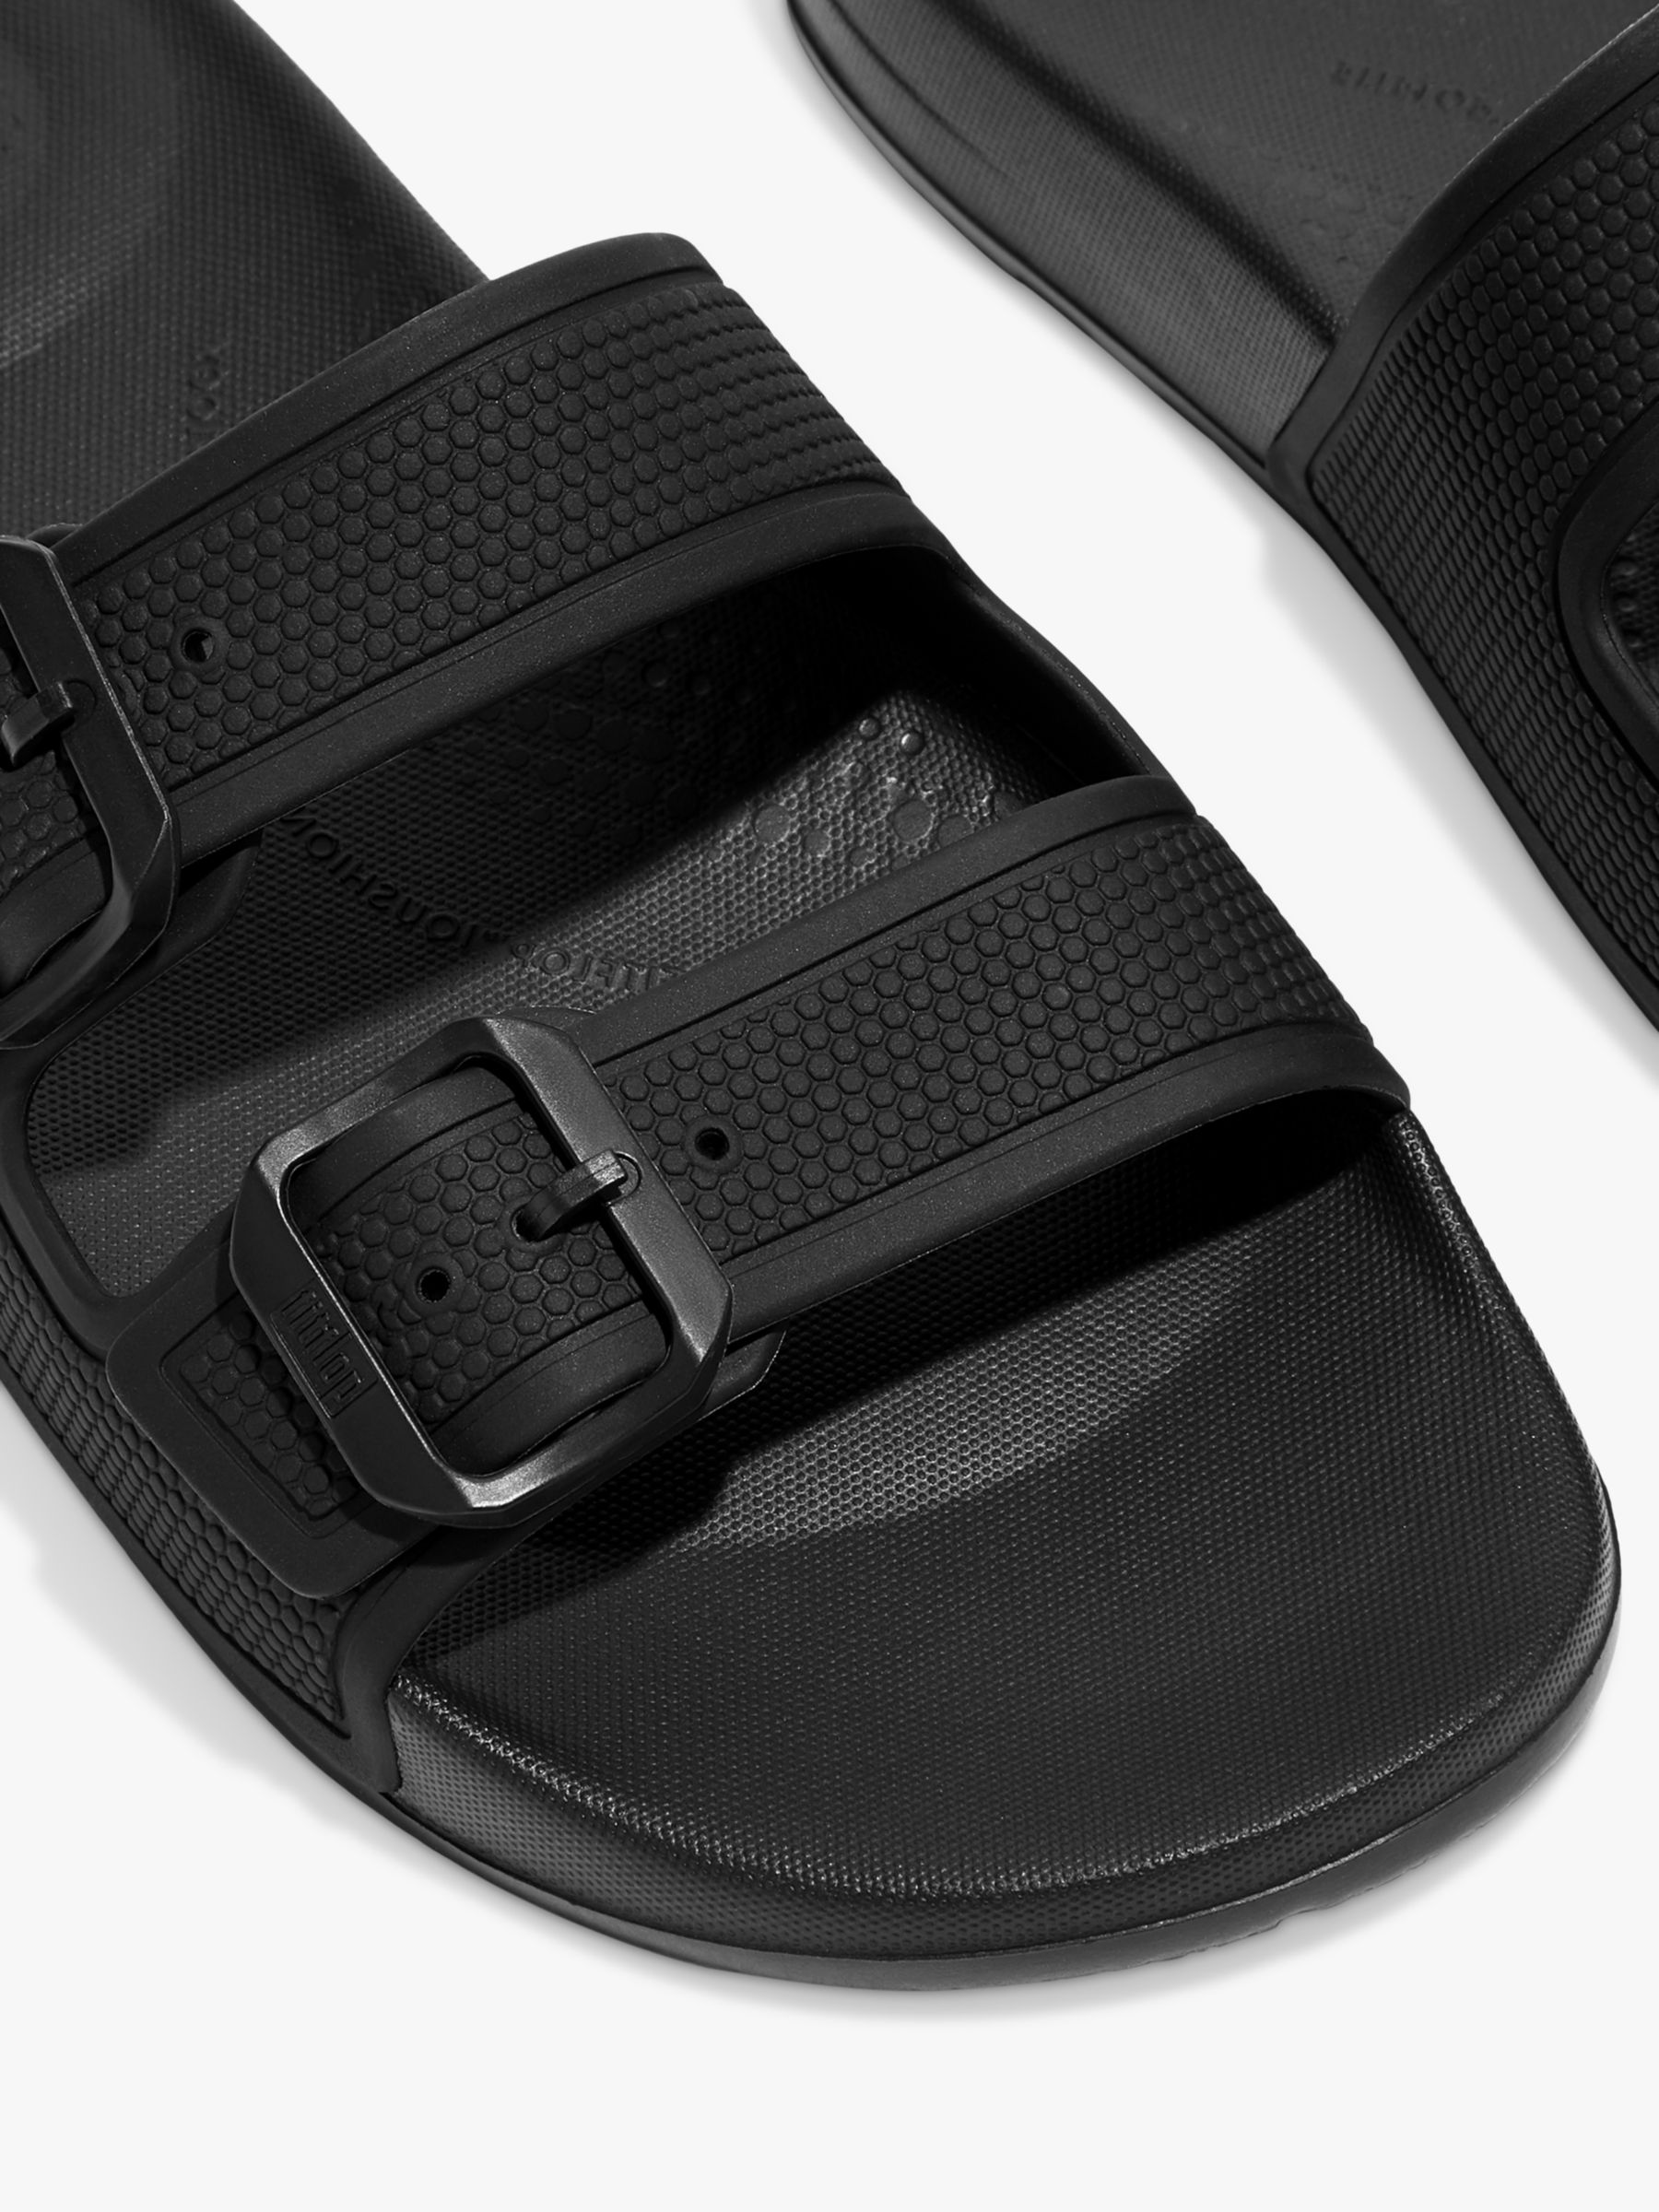 FitFlop IQushion Slider Sandals, Black, 3